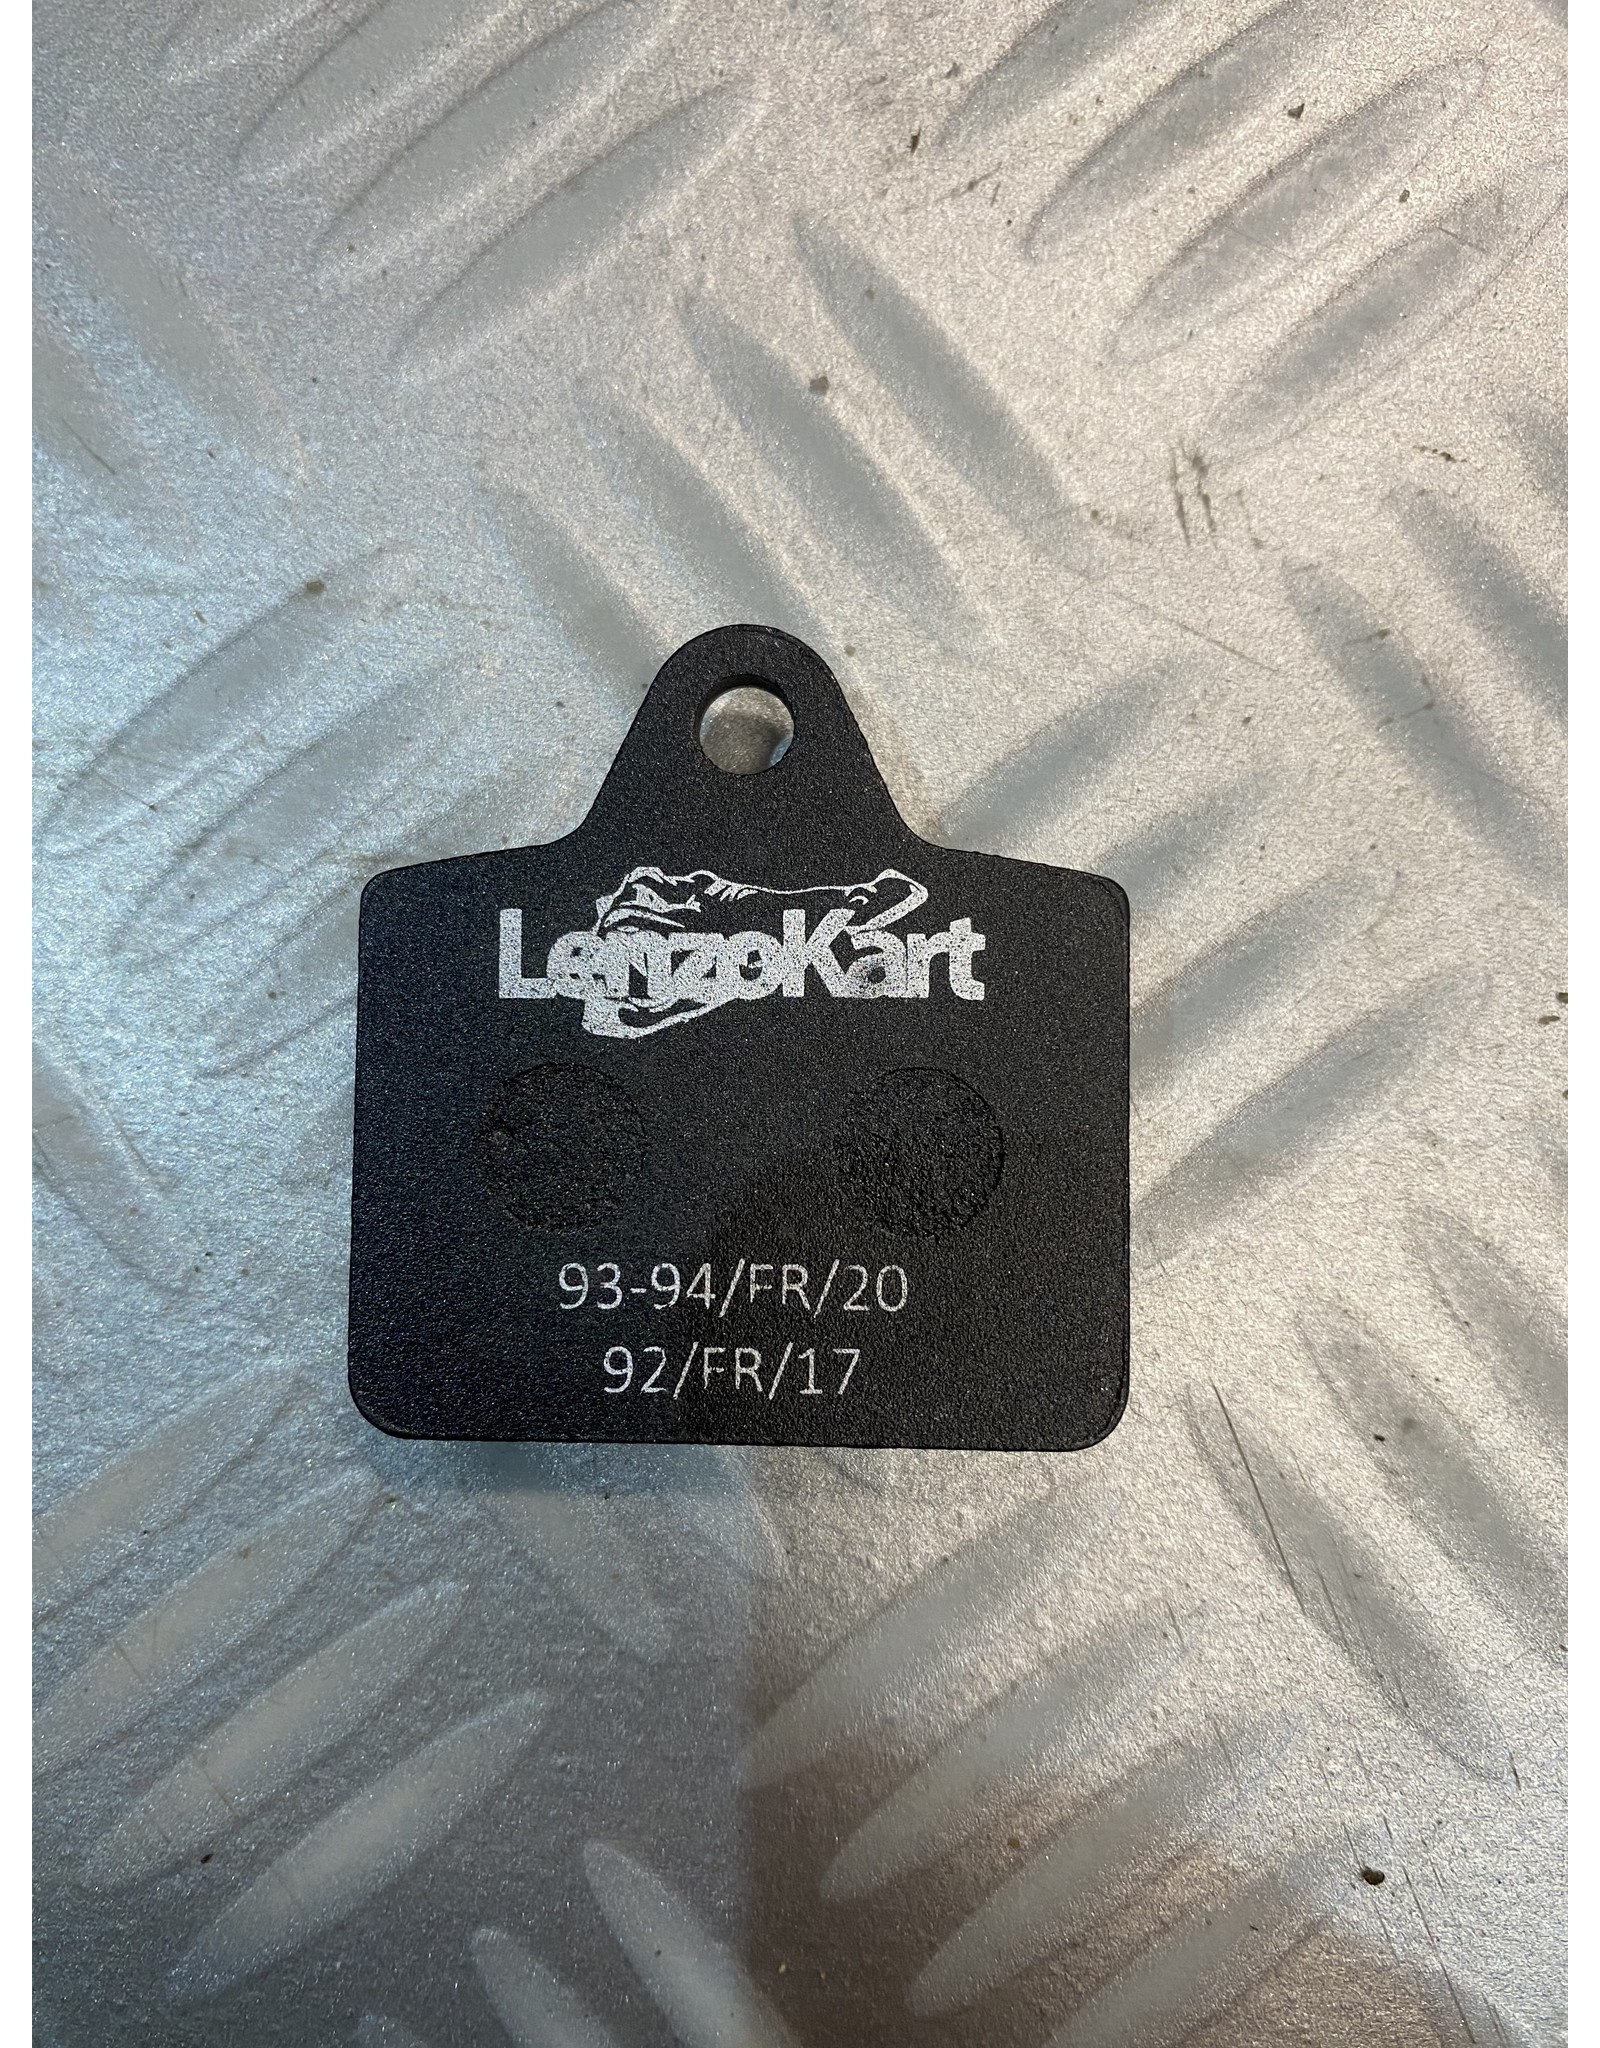 LK Line Lenzo/Luxor rear brake pad OK/OKJ/KZ Hard / Black lkf9 approval 93/fr/ch